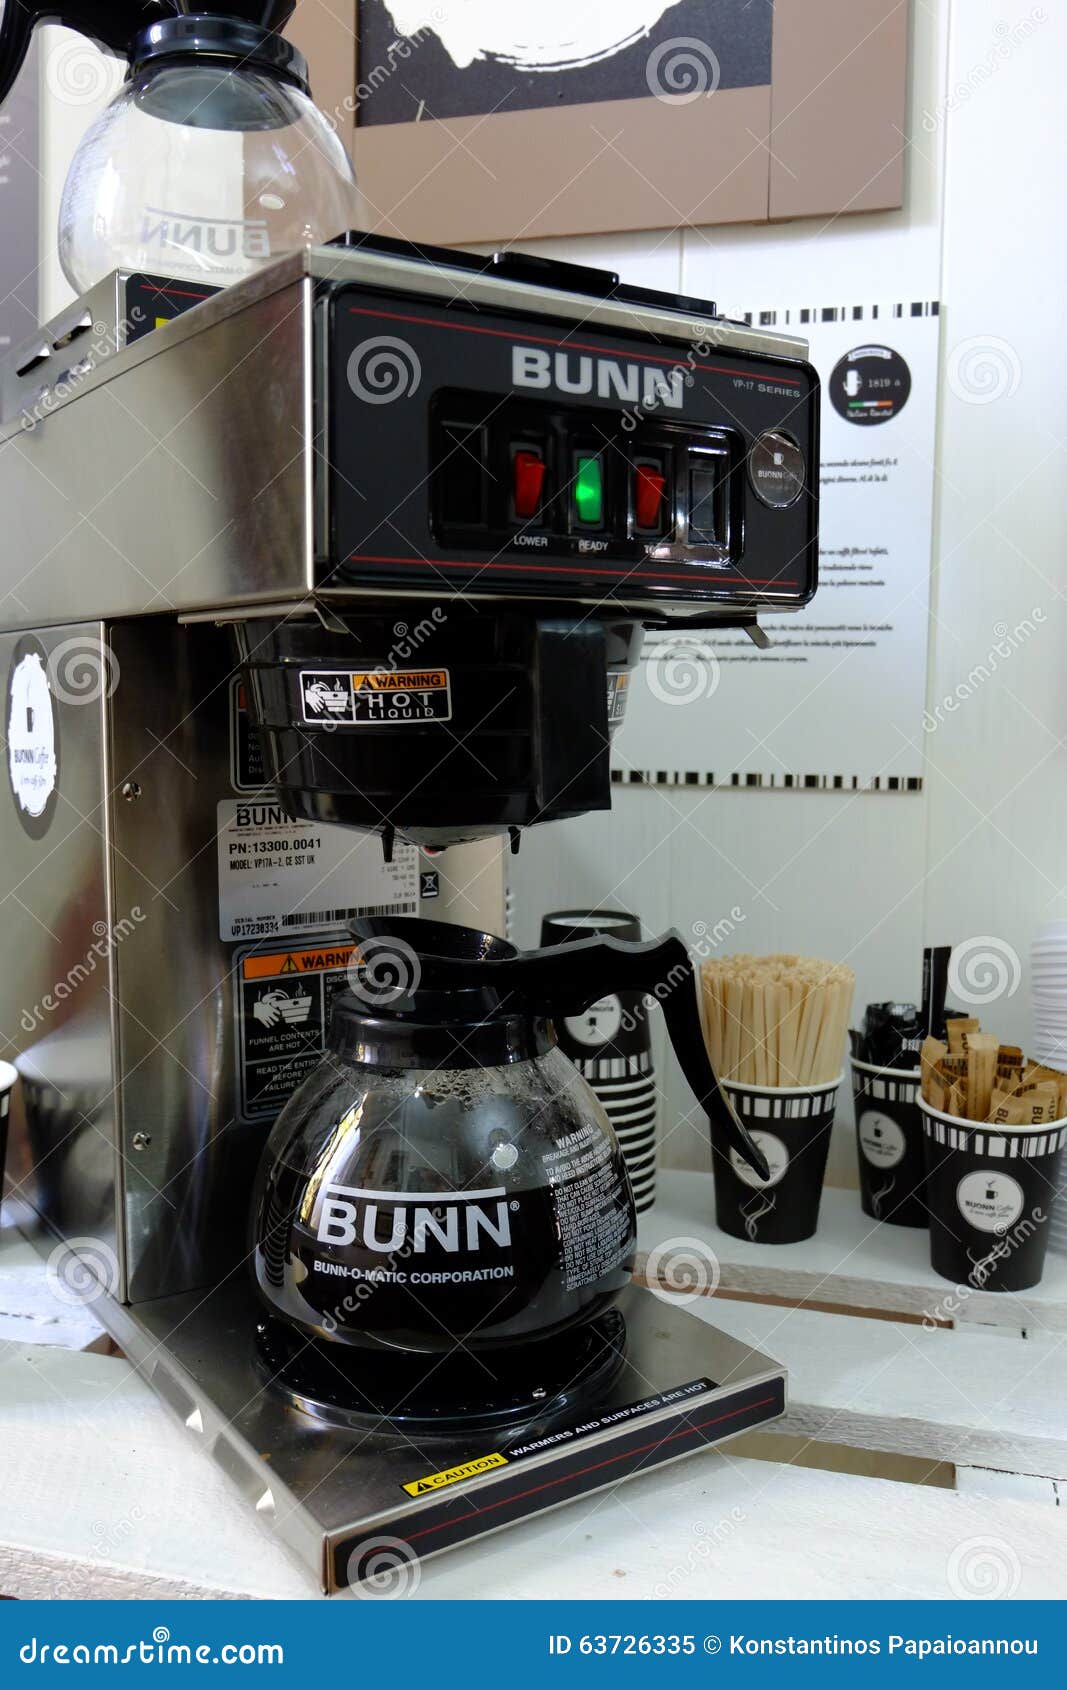 American coffee machine